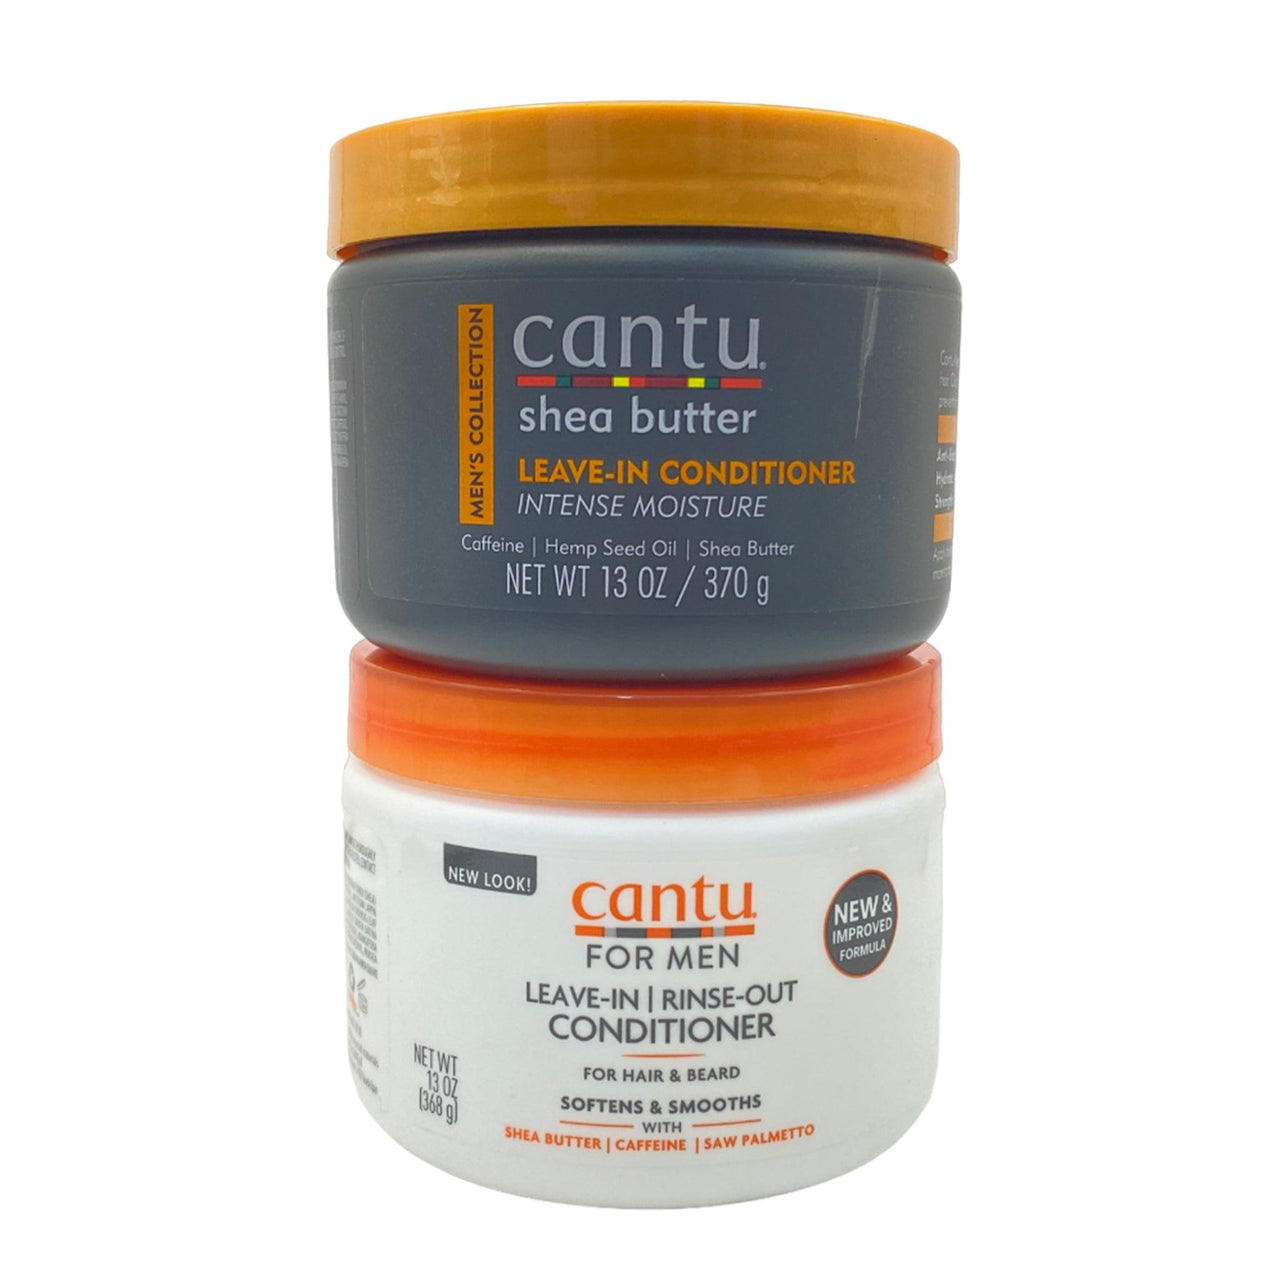 Mix of Cantu Hair Products - Wholesale (50 Pcs Box) - Discount Wholesalers Inc